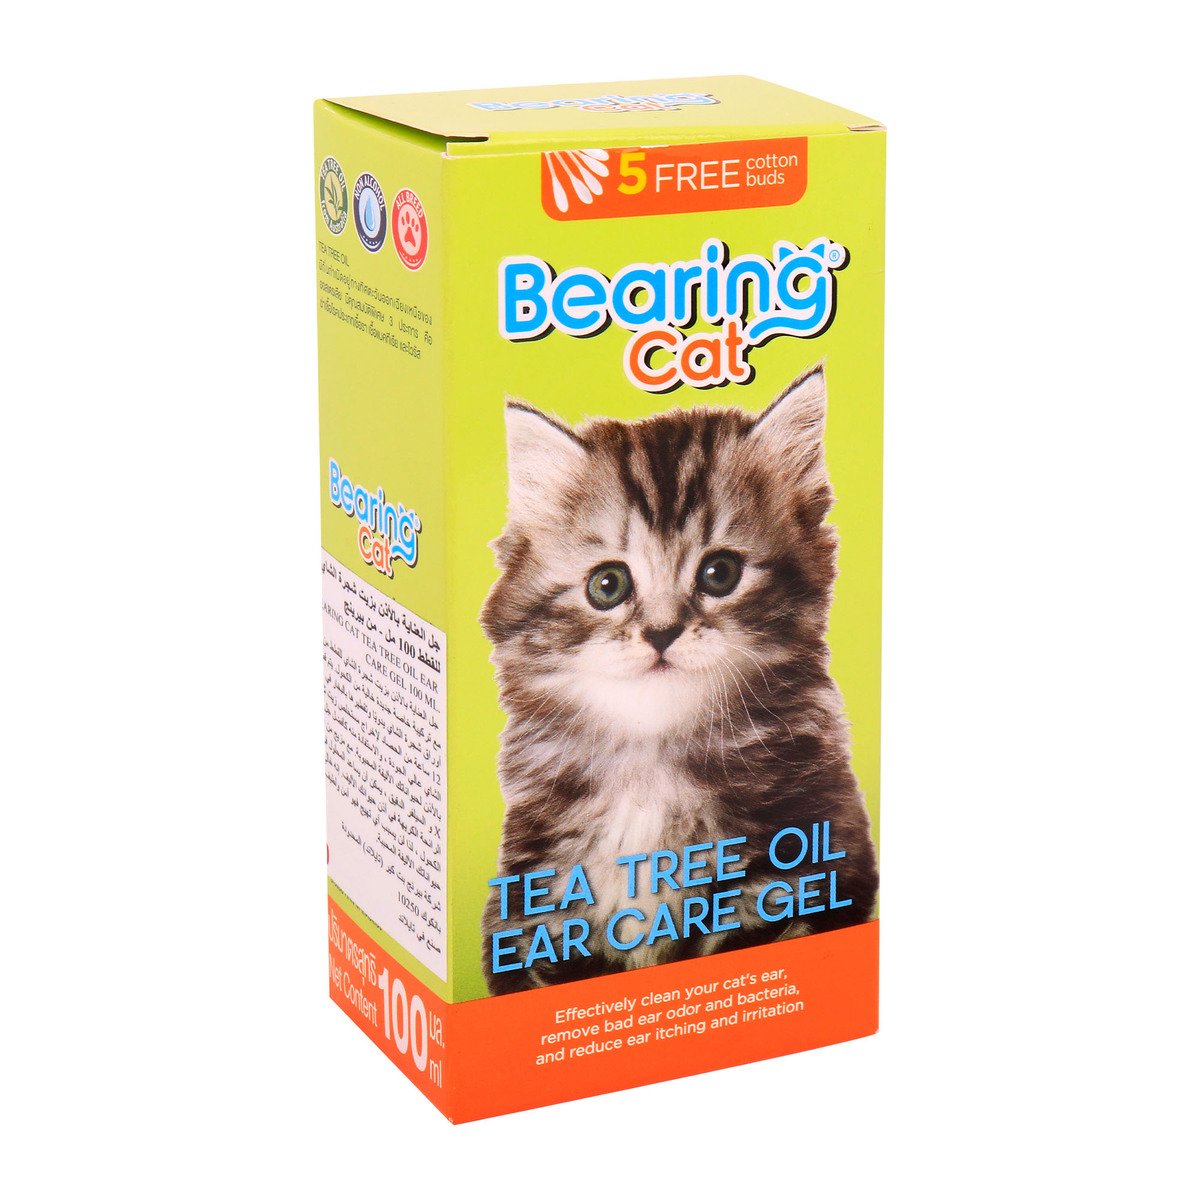 Bearing Cat Ear Care Gel, Tea Tree Oil, 100 ml